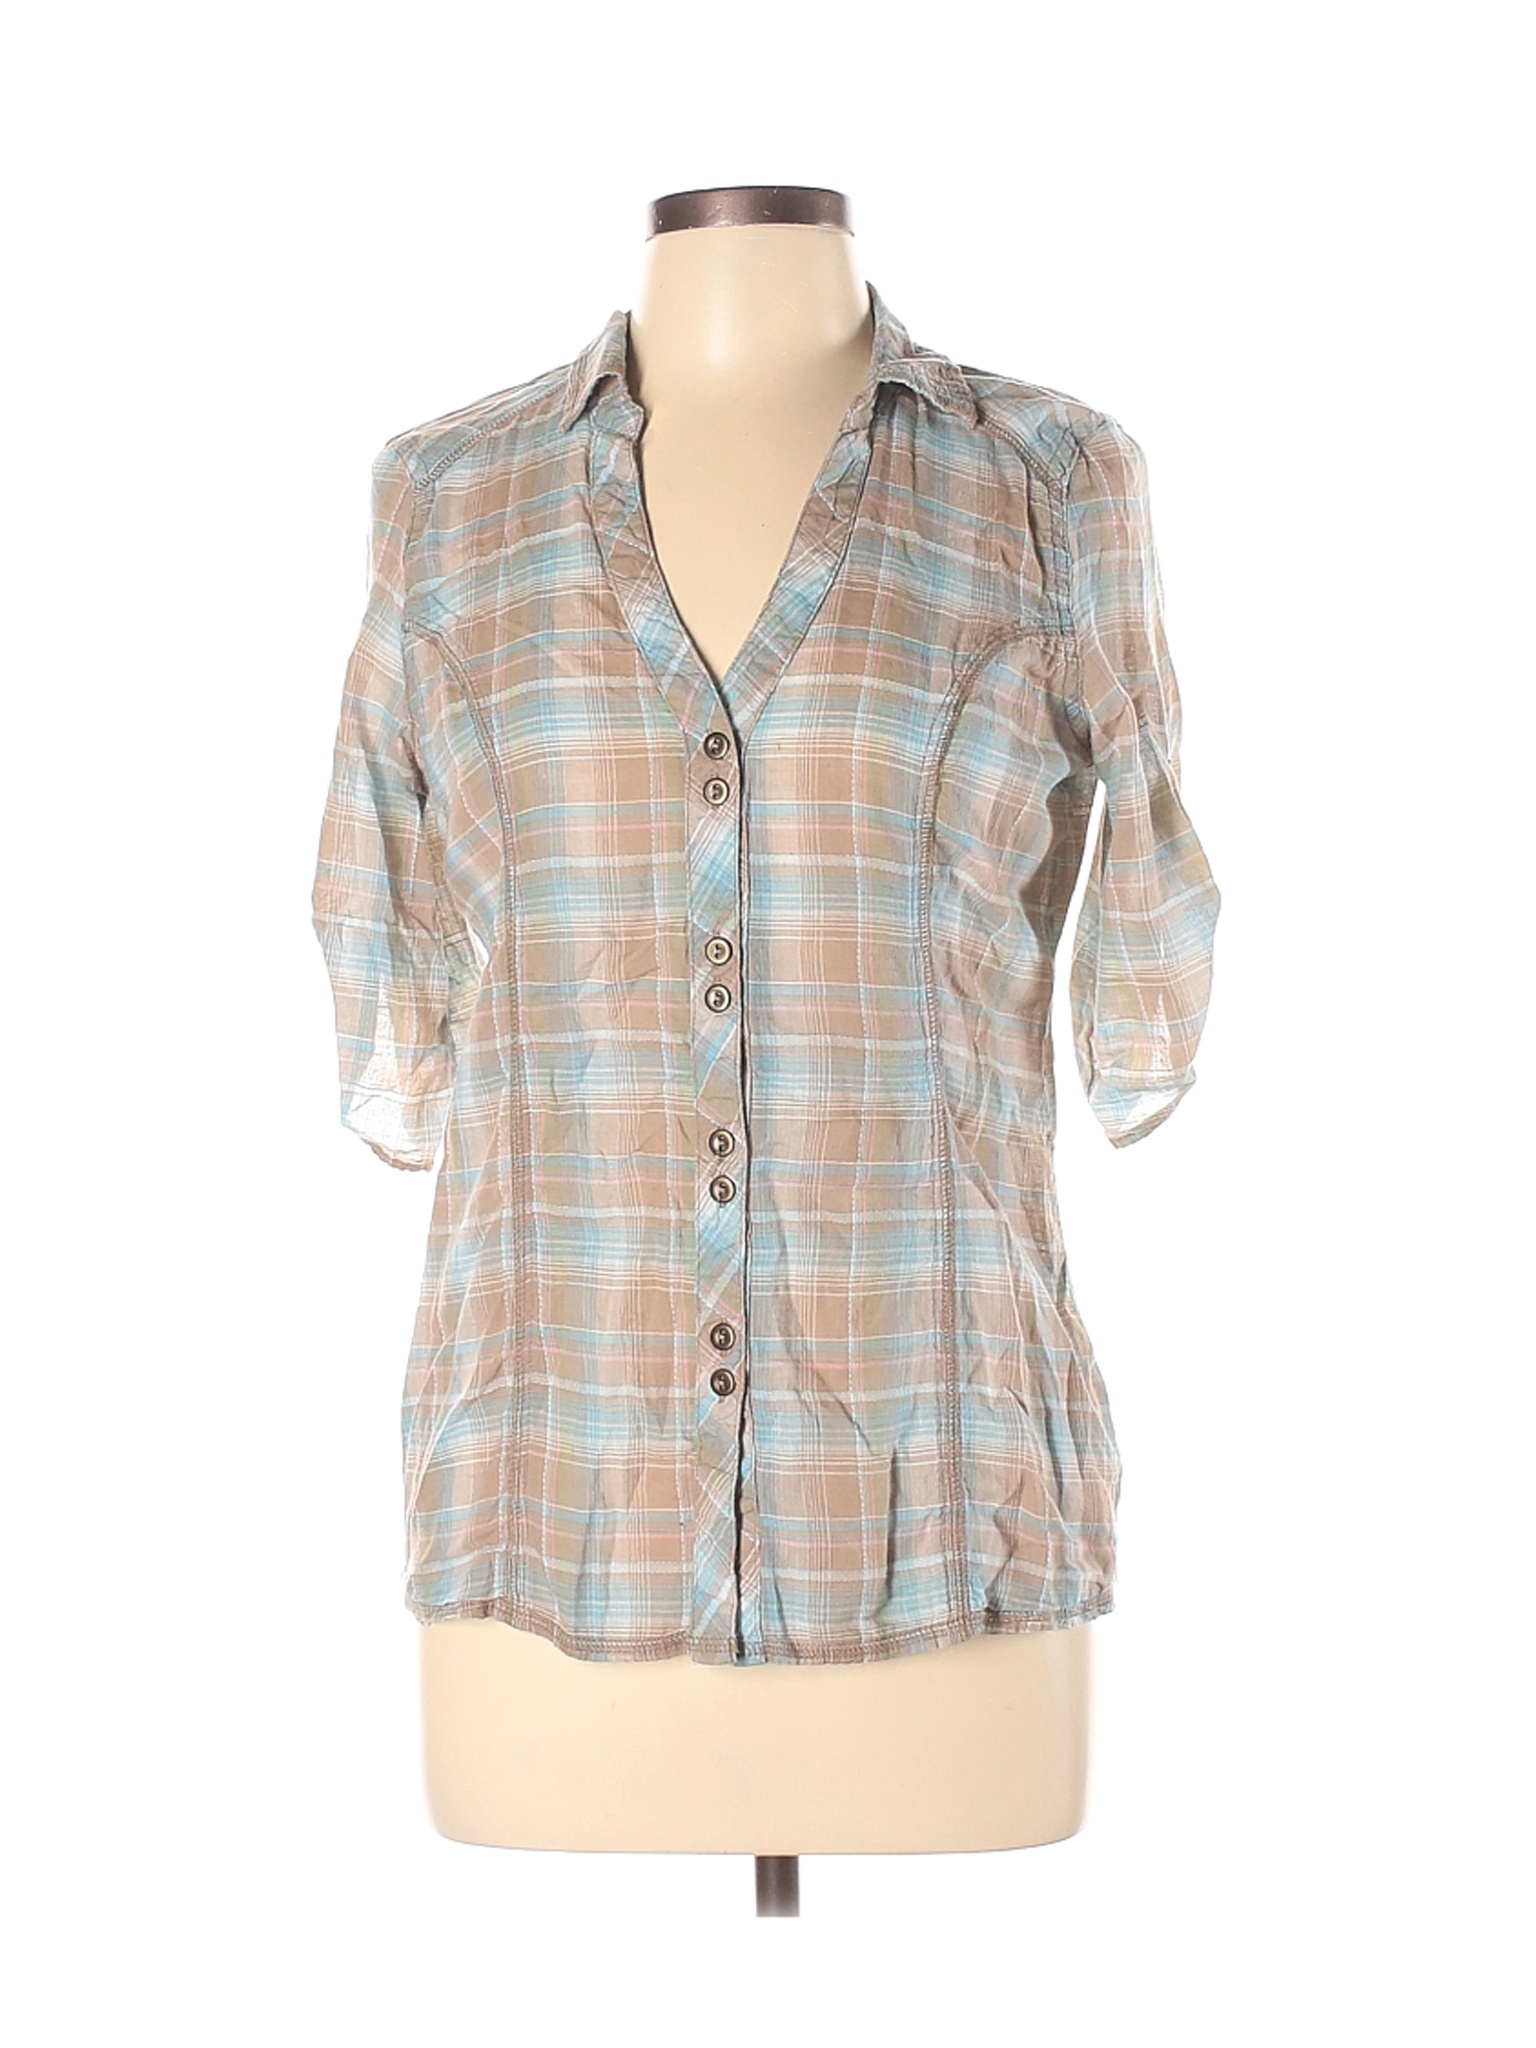 Maurices Women Brown Short Sleeve Button-Down Shirt L | eBay